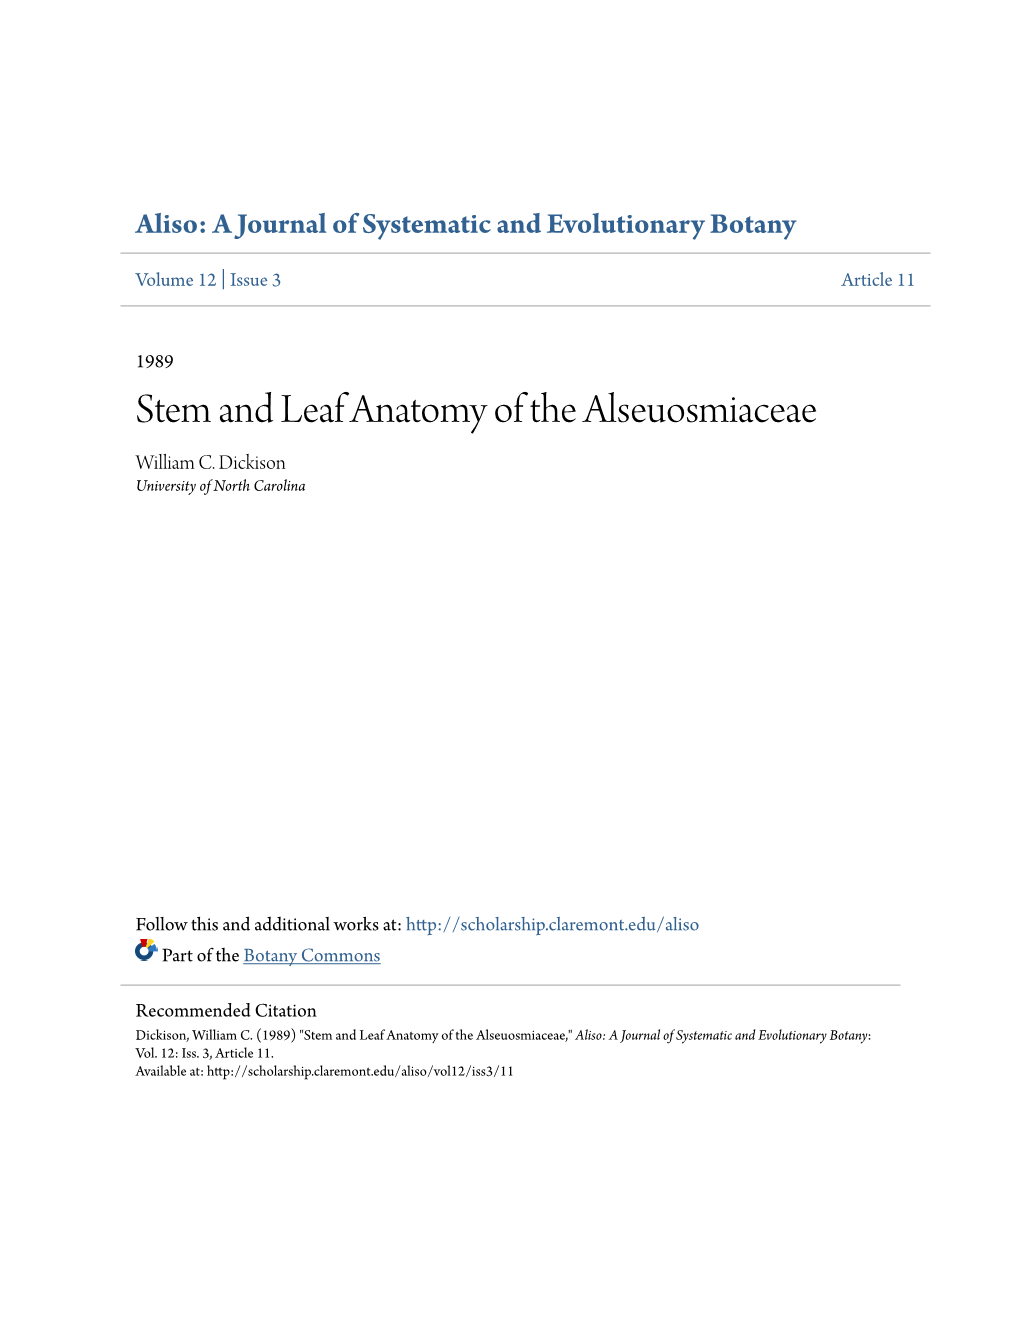 Stem and Leaf Anatomy of the Alseuosmiaceae William C